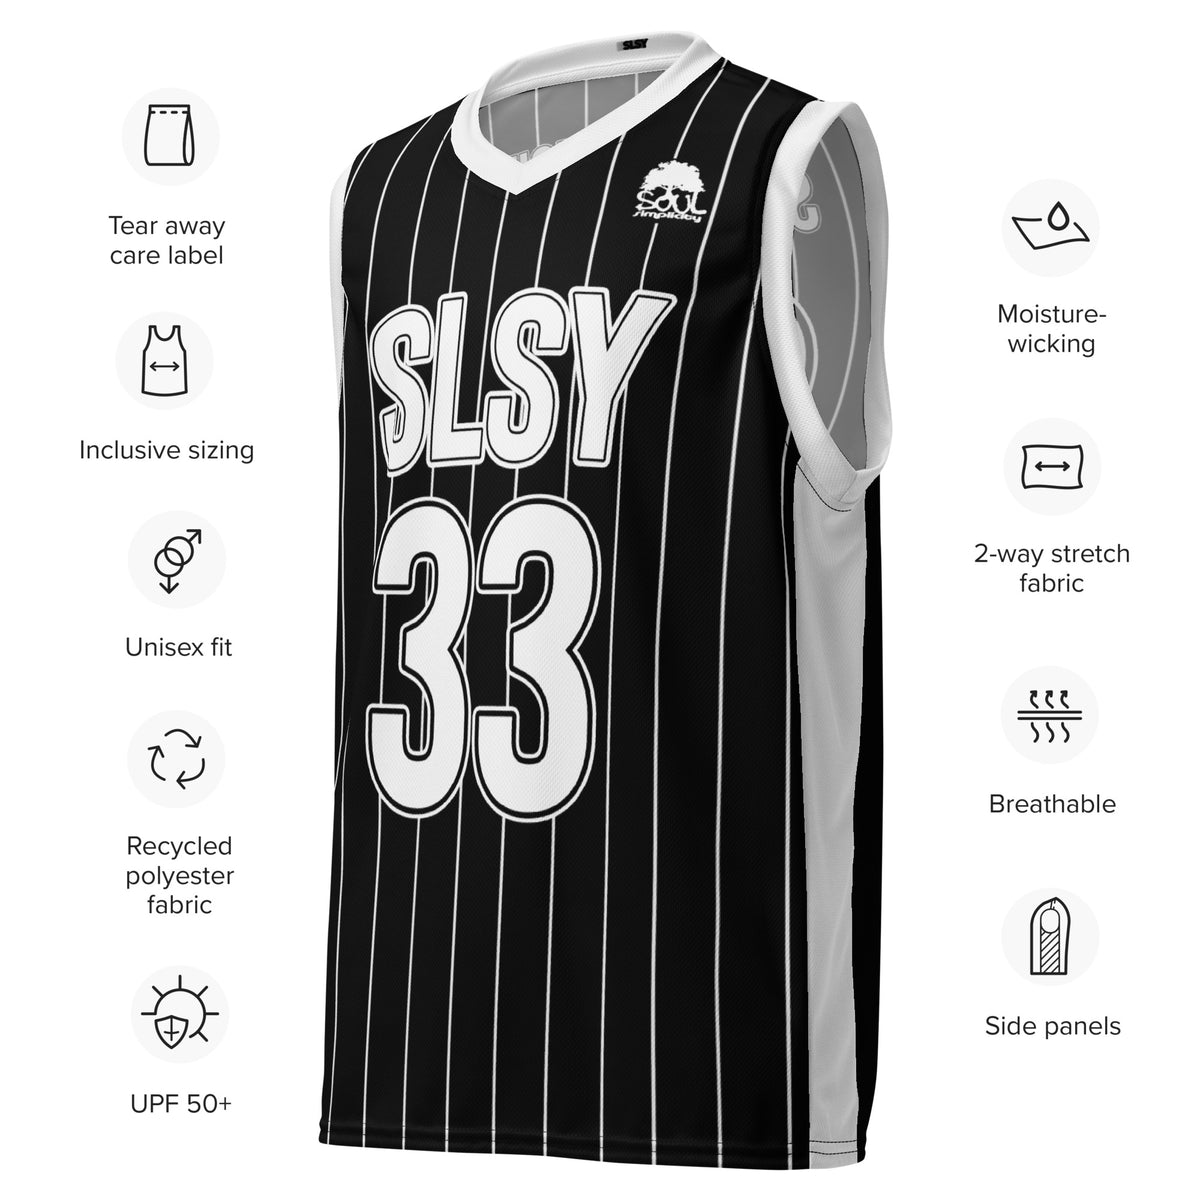 gray basketball jersey design